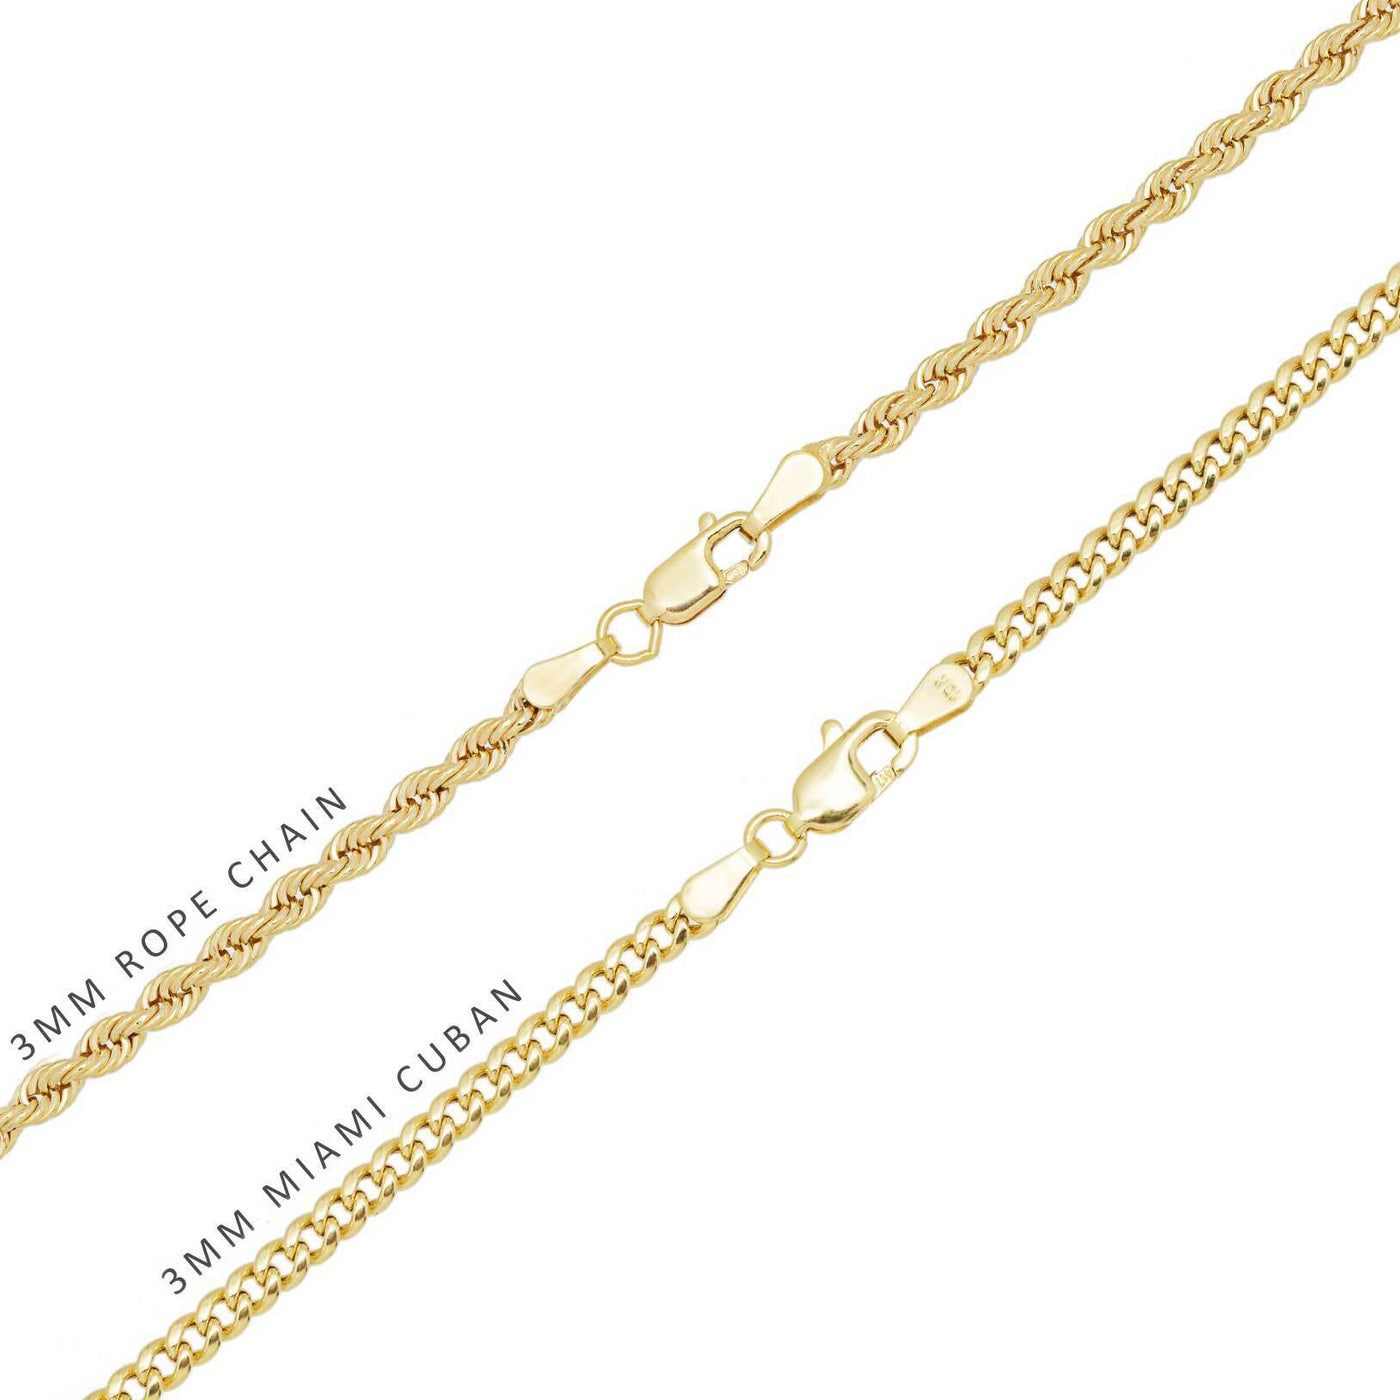 3.5" Jesus Christ Crucifix Cross Pendant & Chain Necklace Set 10K Yellow White Gold